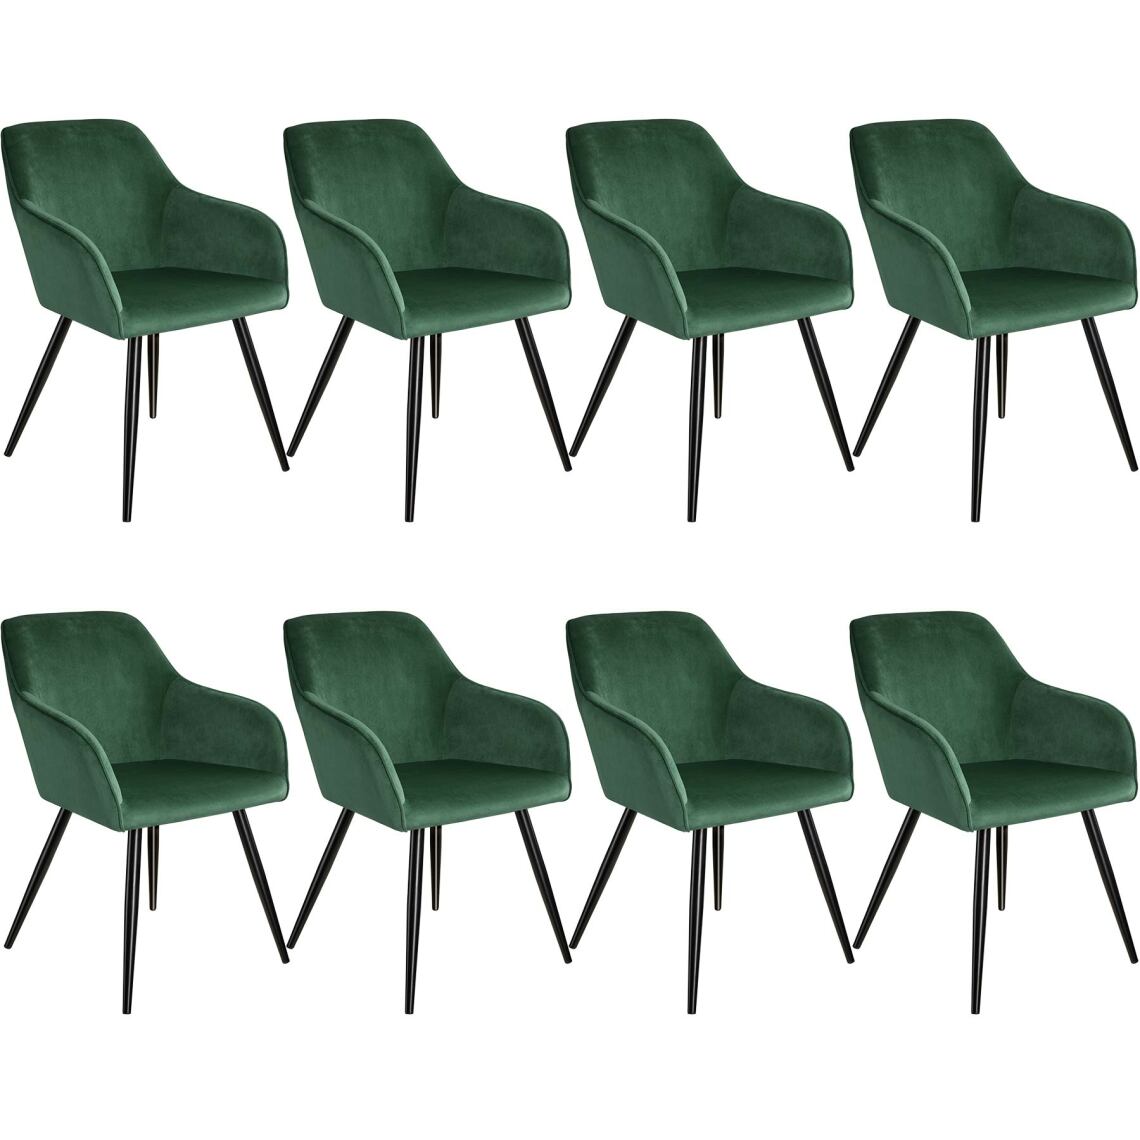 Tectake - 8 Chaises MARILYN Design en Velours Style Scandinave - vert foncé/noir - Chaises